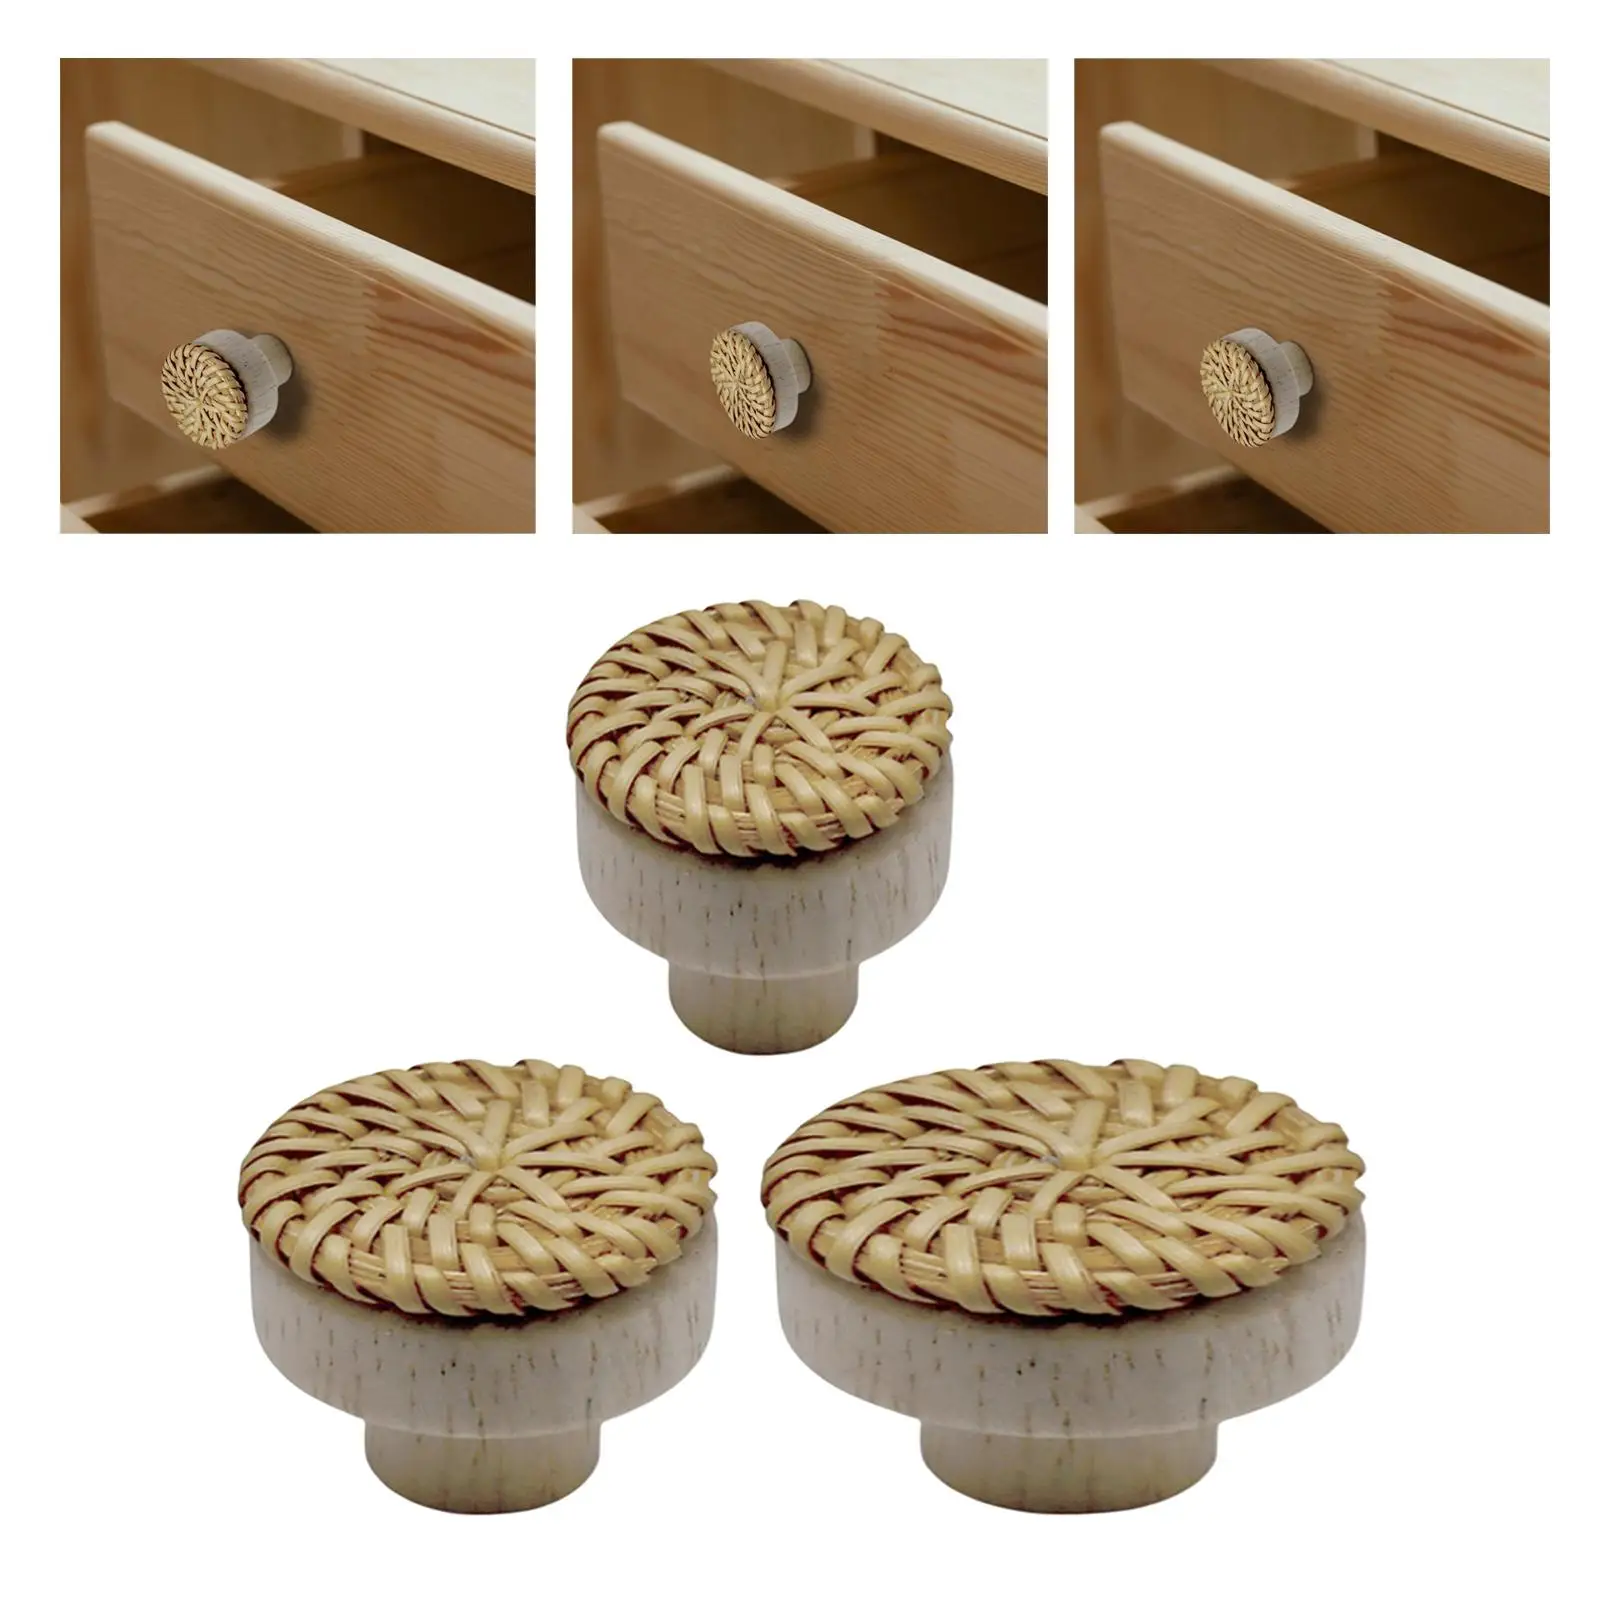 Boho Dresser Knob Drawer Pulls Decoration Wood Retro Style Accessories Rustic Handcraft Home Rattan Cabinet Handles for Kitchen